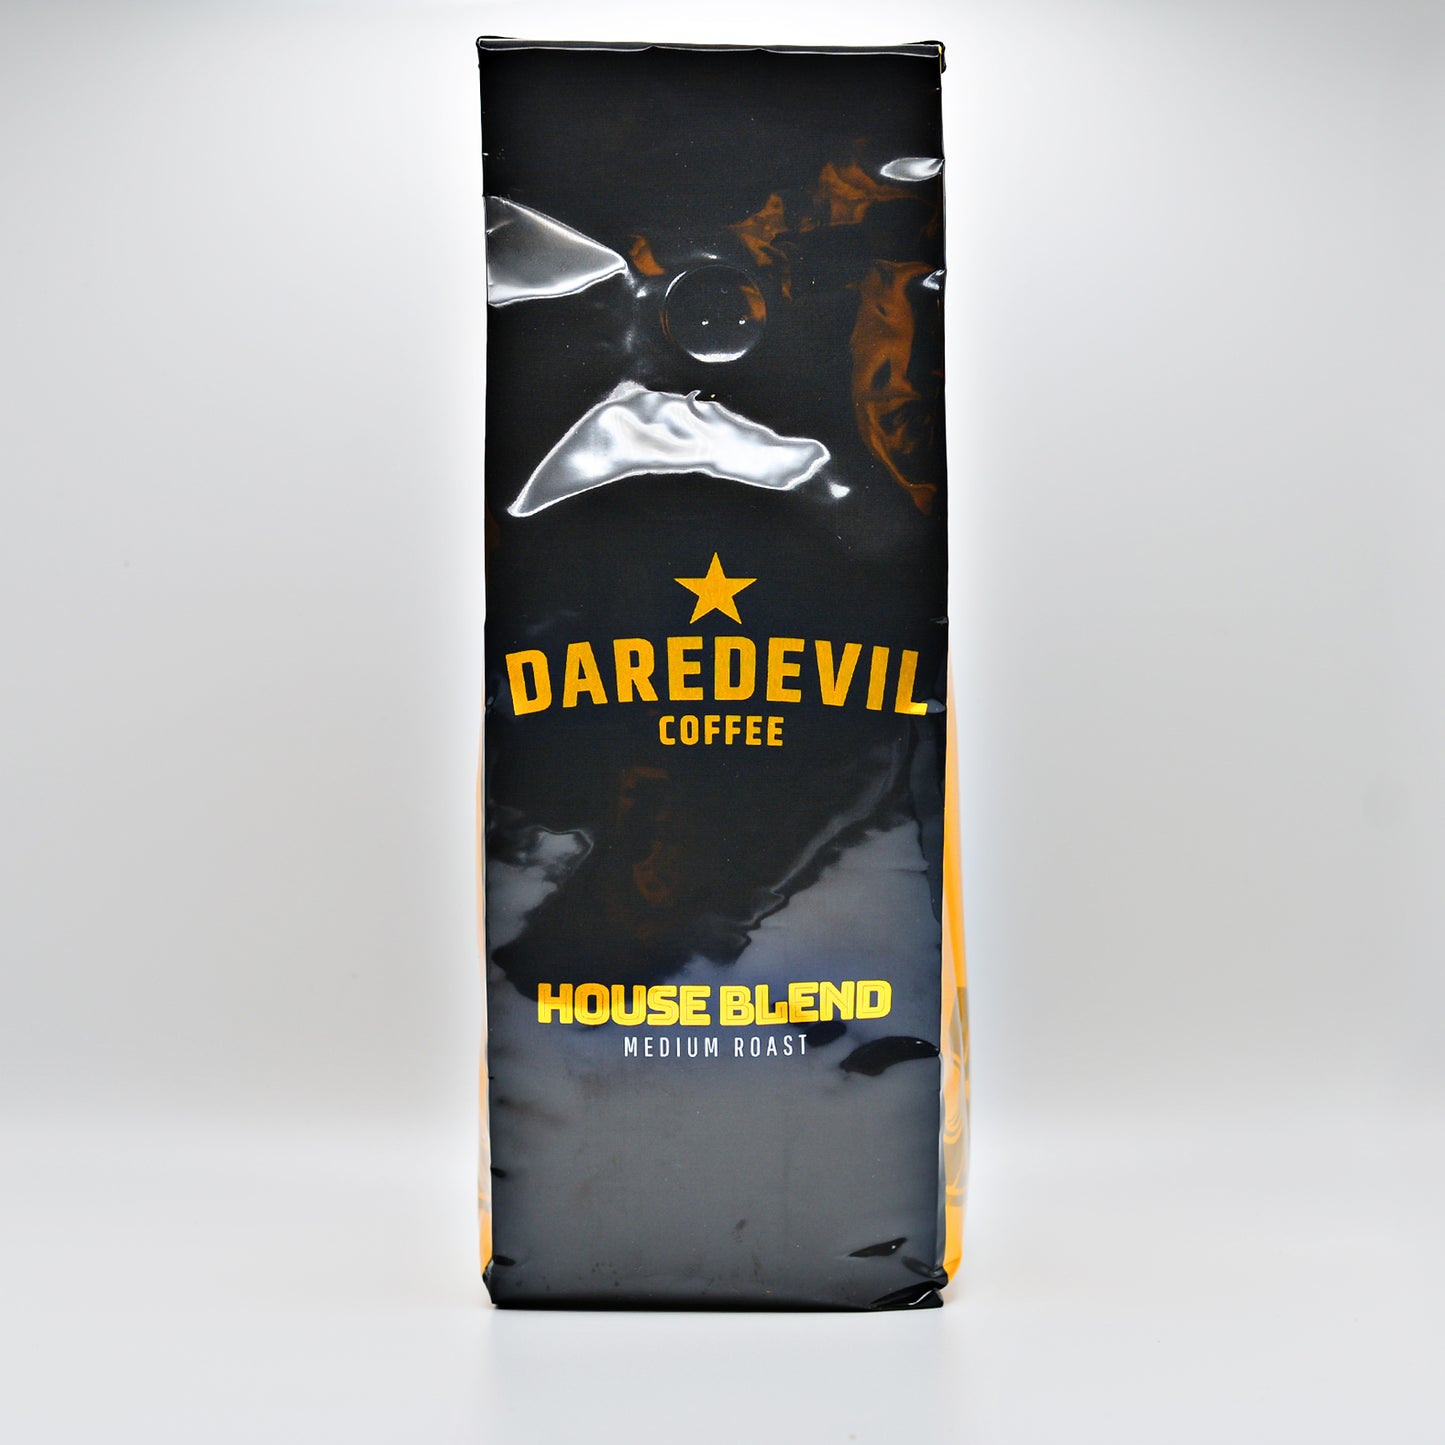 Daredevil Coffee - House Blend 12oz Bag